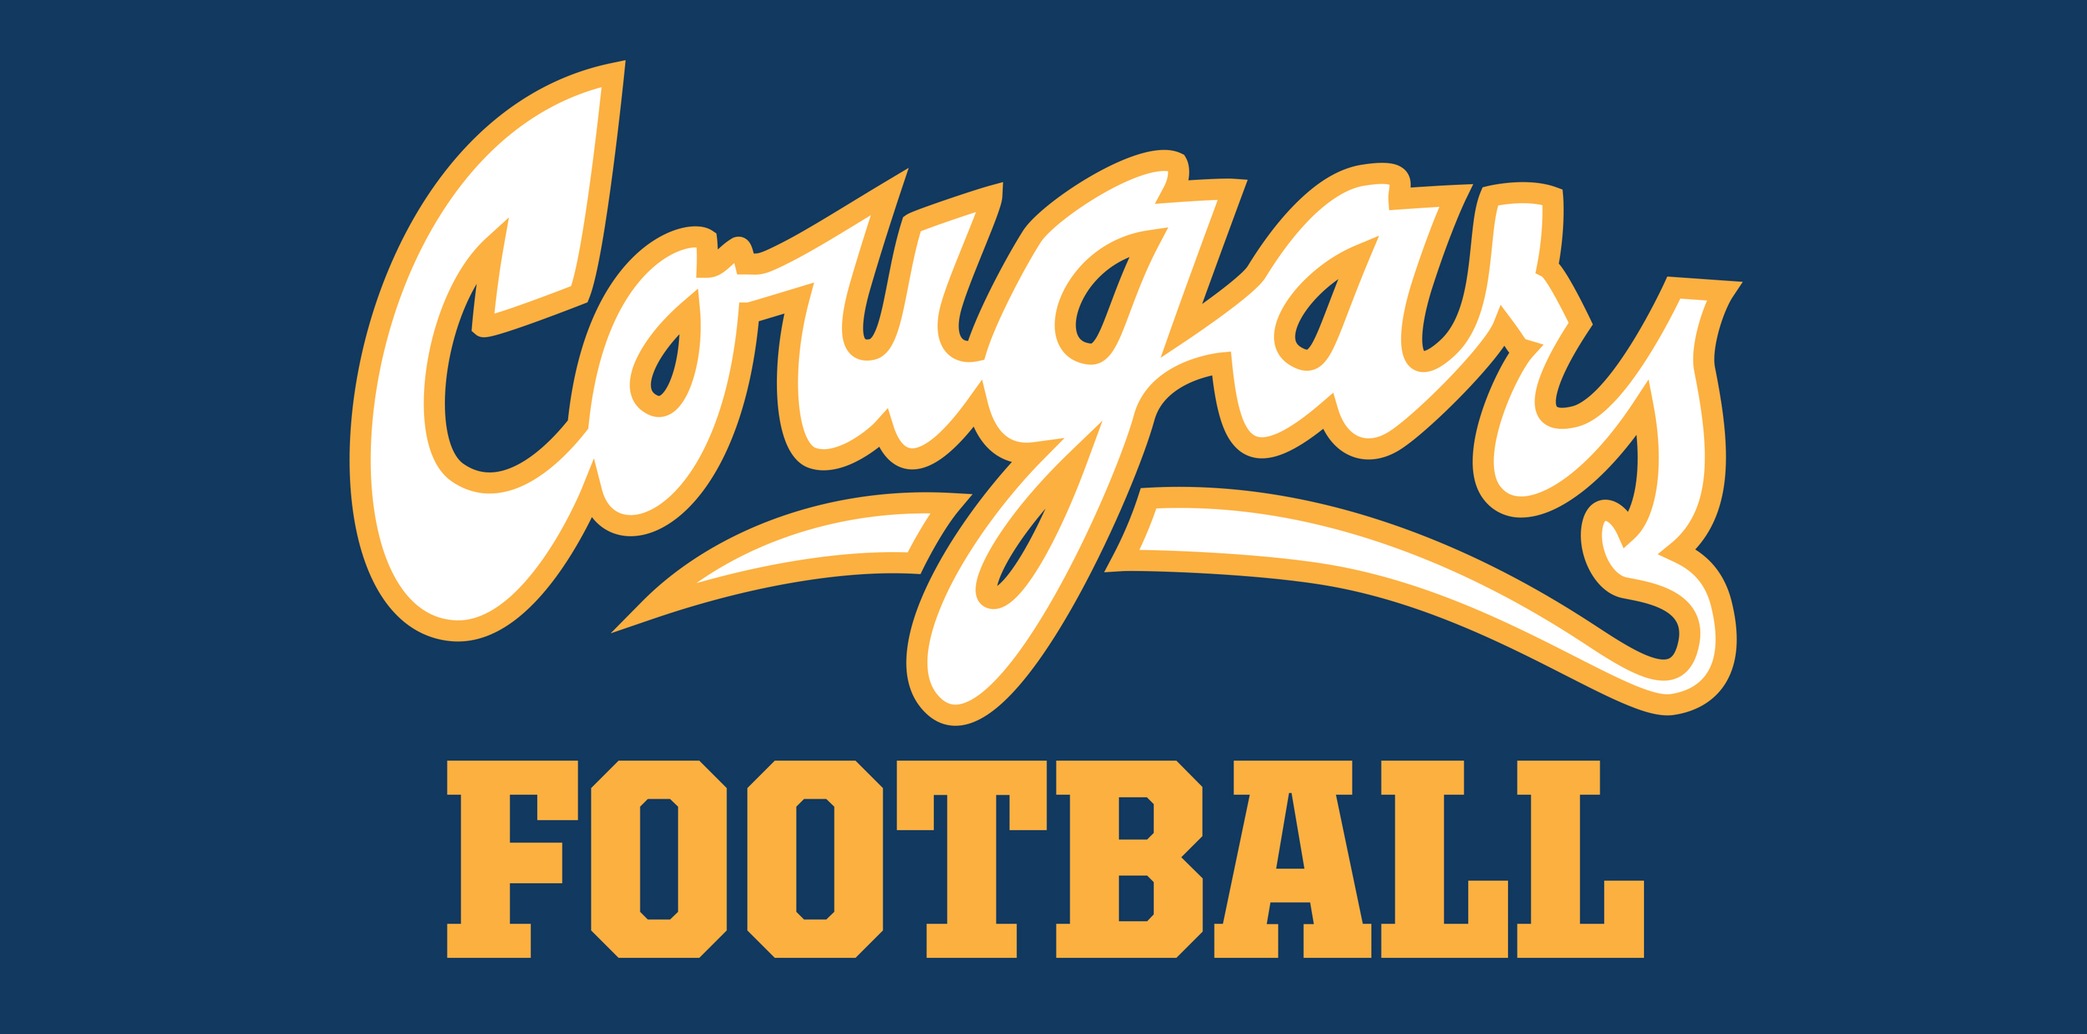 Cougars Football script logo.